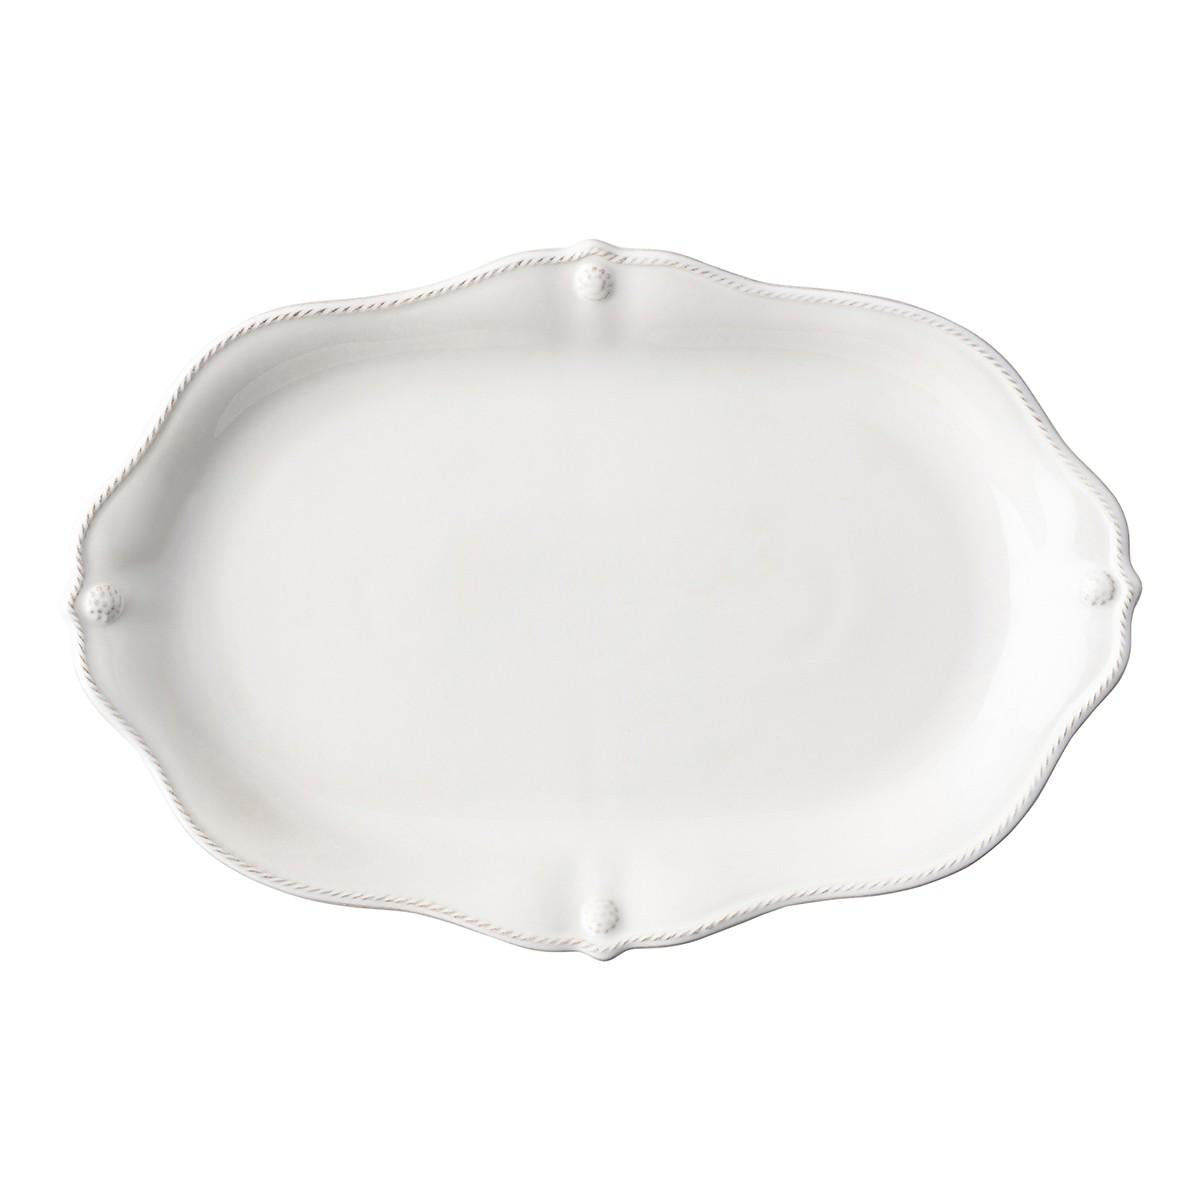 Berry & Thread 15" Oval Platter - Whitewash